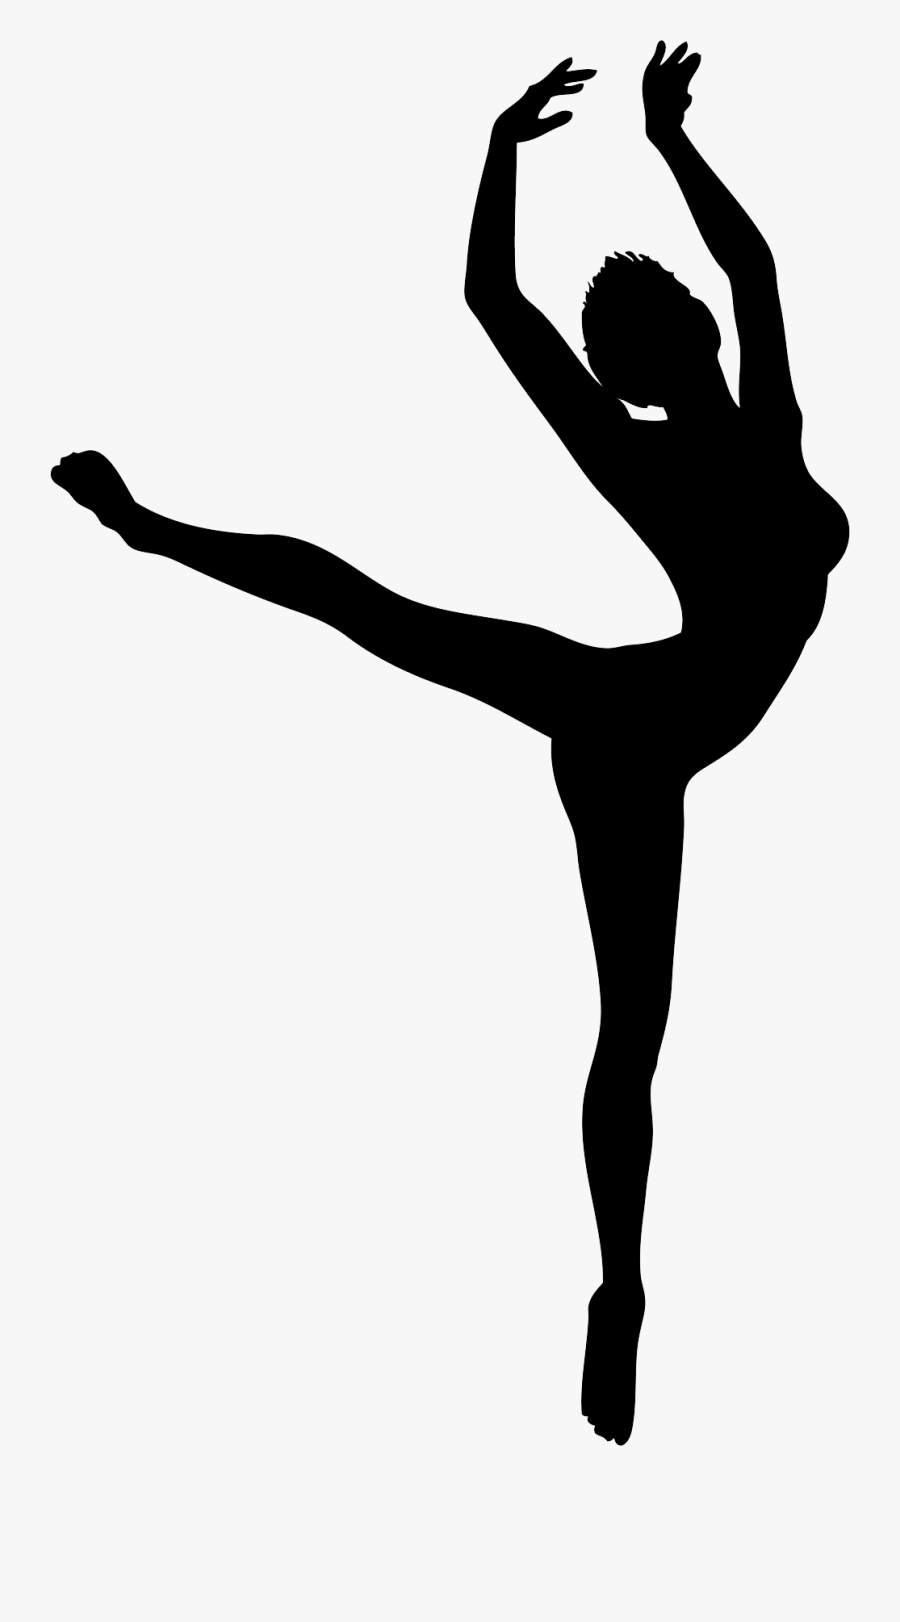 Dancer Silhouette - Dance Silhouette Transparent Background, Transparent Clipart